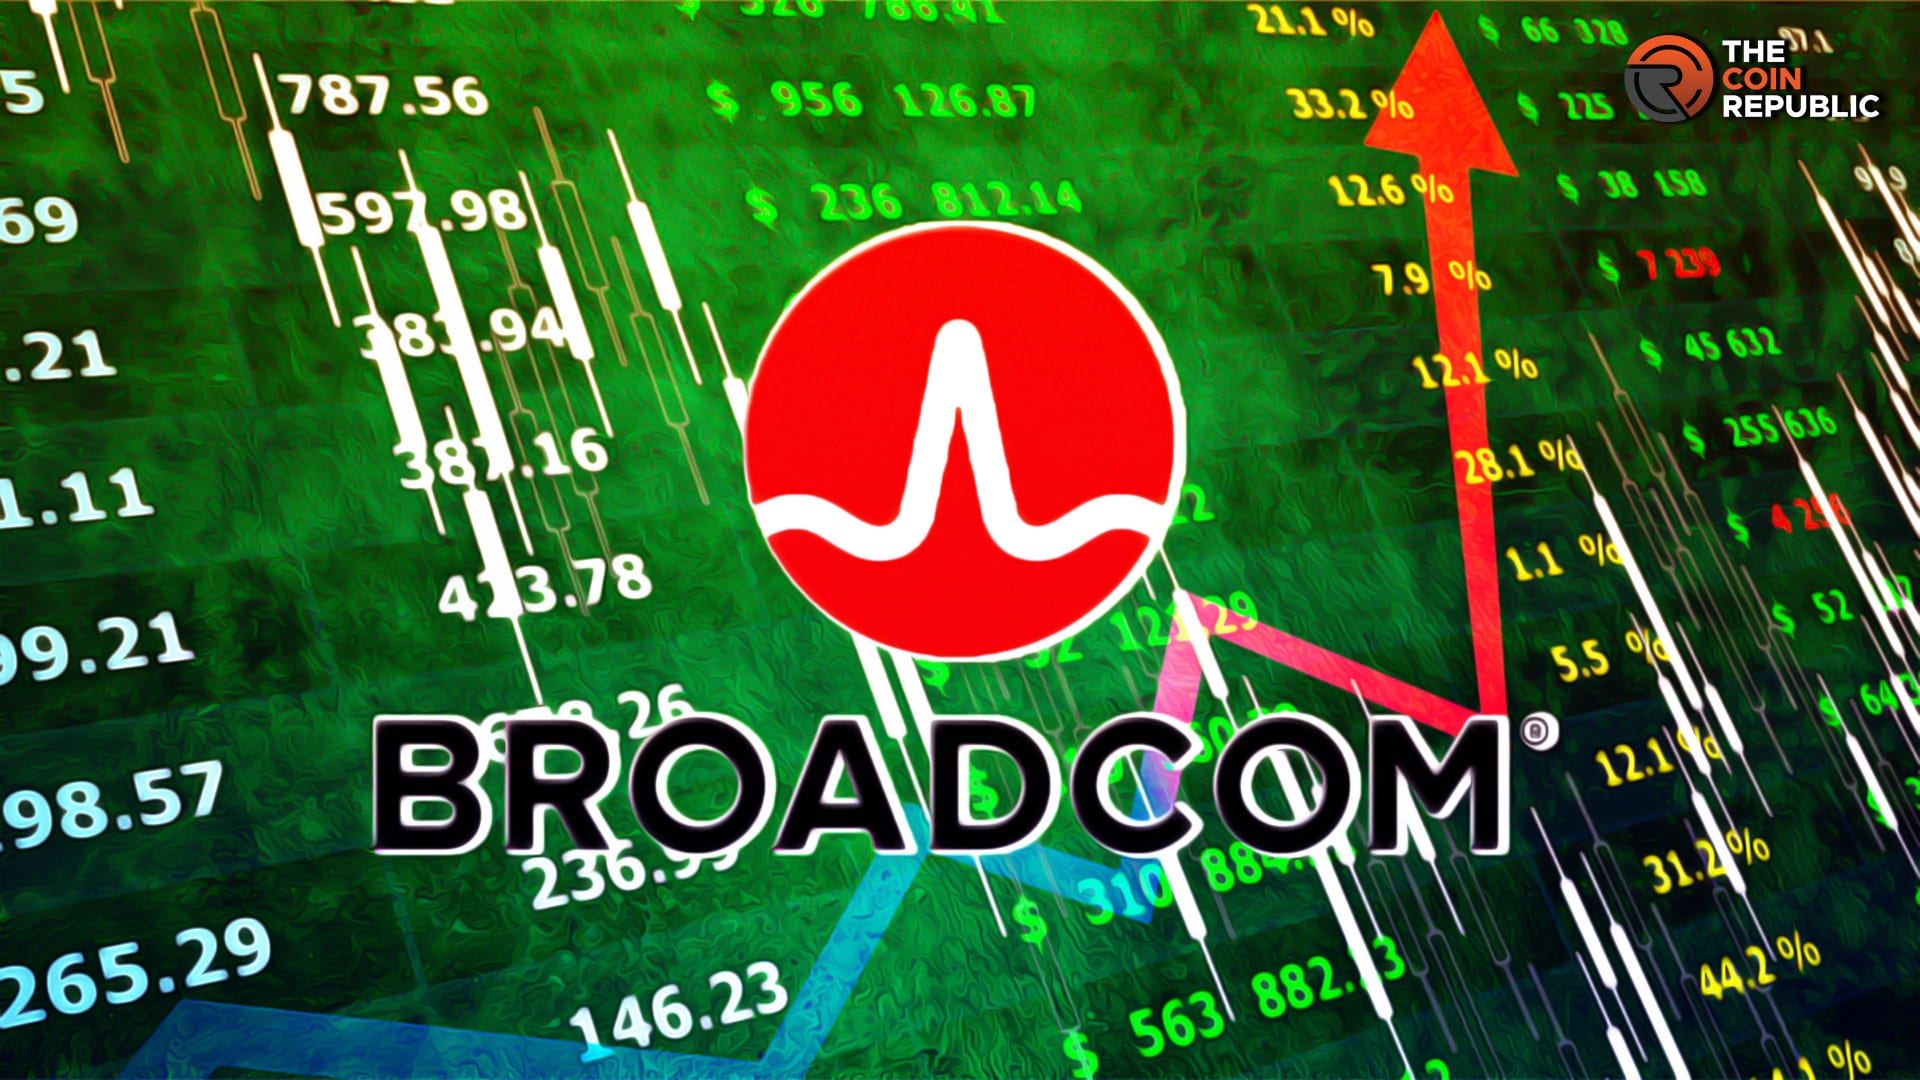 Broadcom Inc.: AVGO Stock Price Sustaining For $1000, Insights!